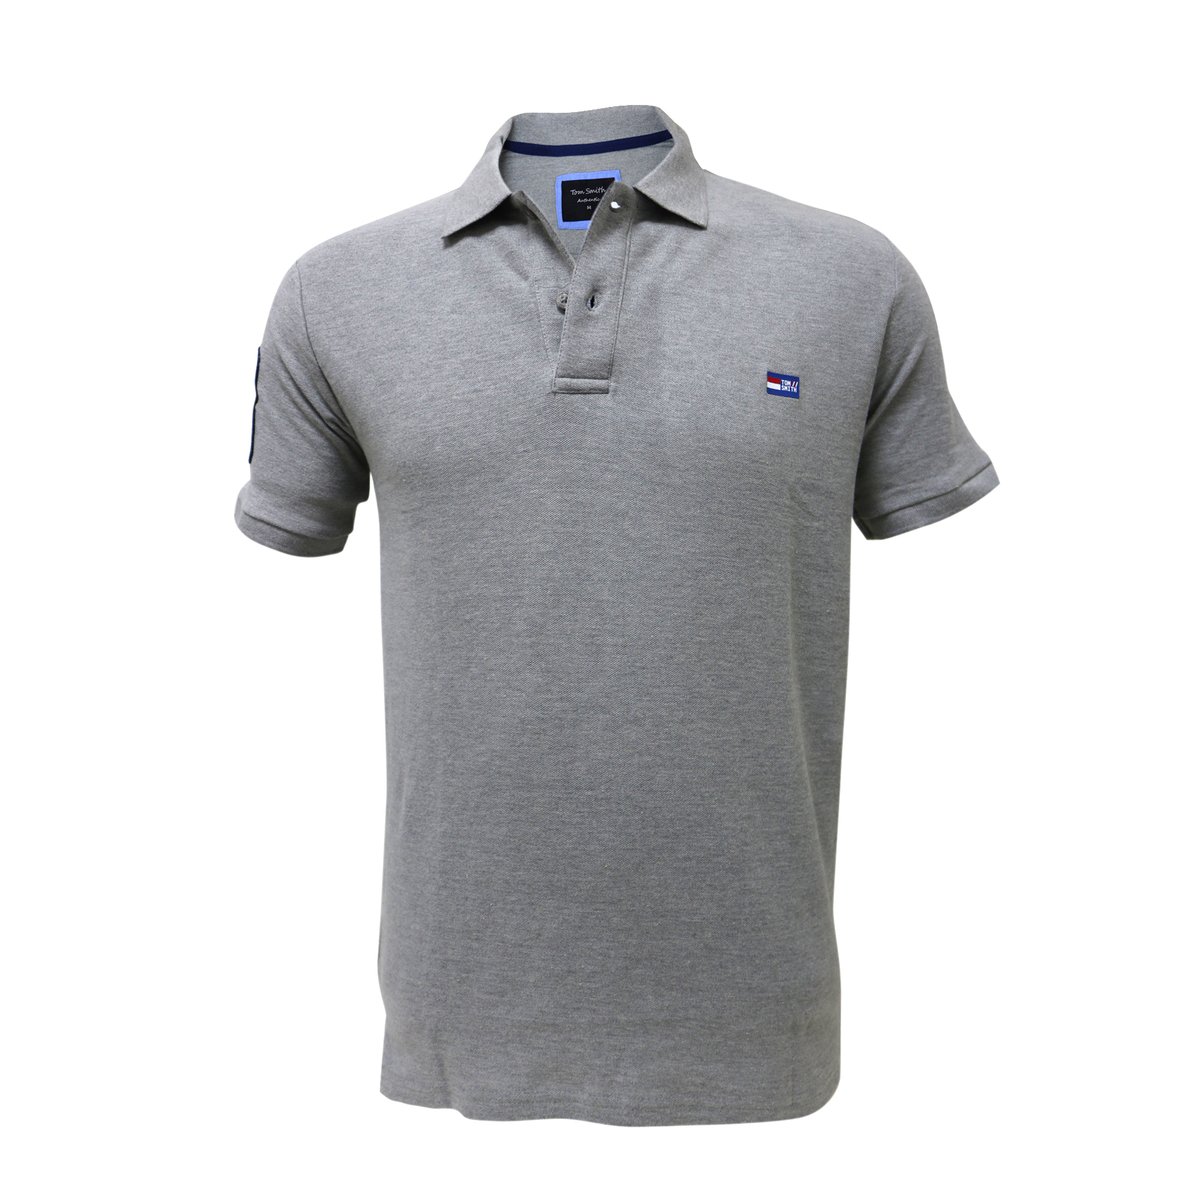 Tom Smith Polo T-Shirt Grey Melage - M